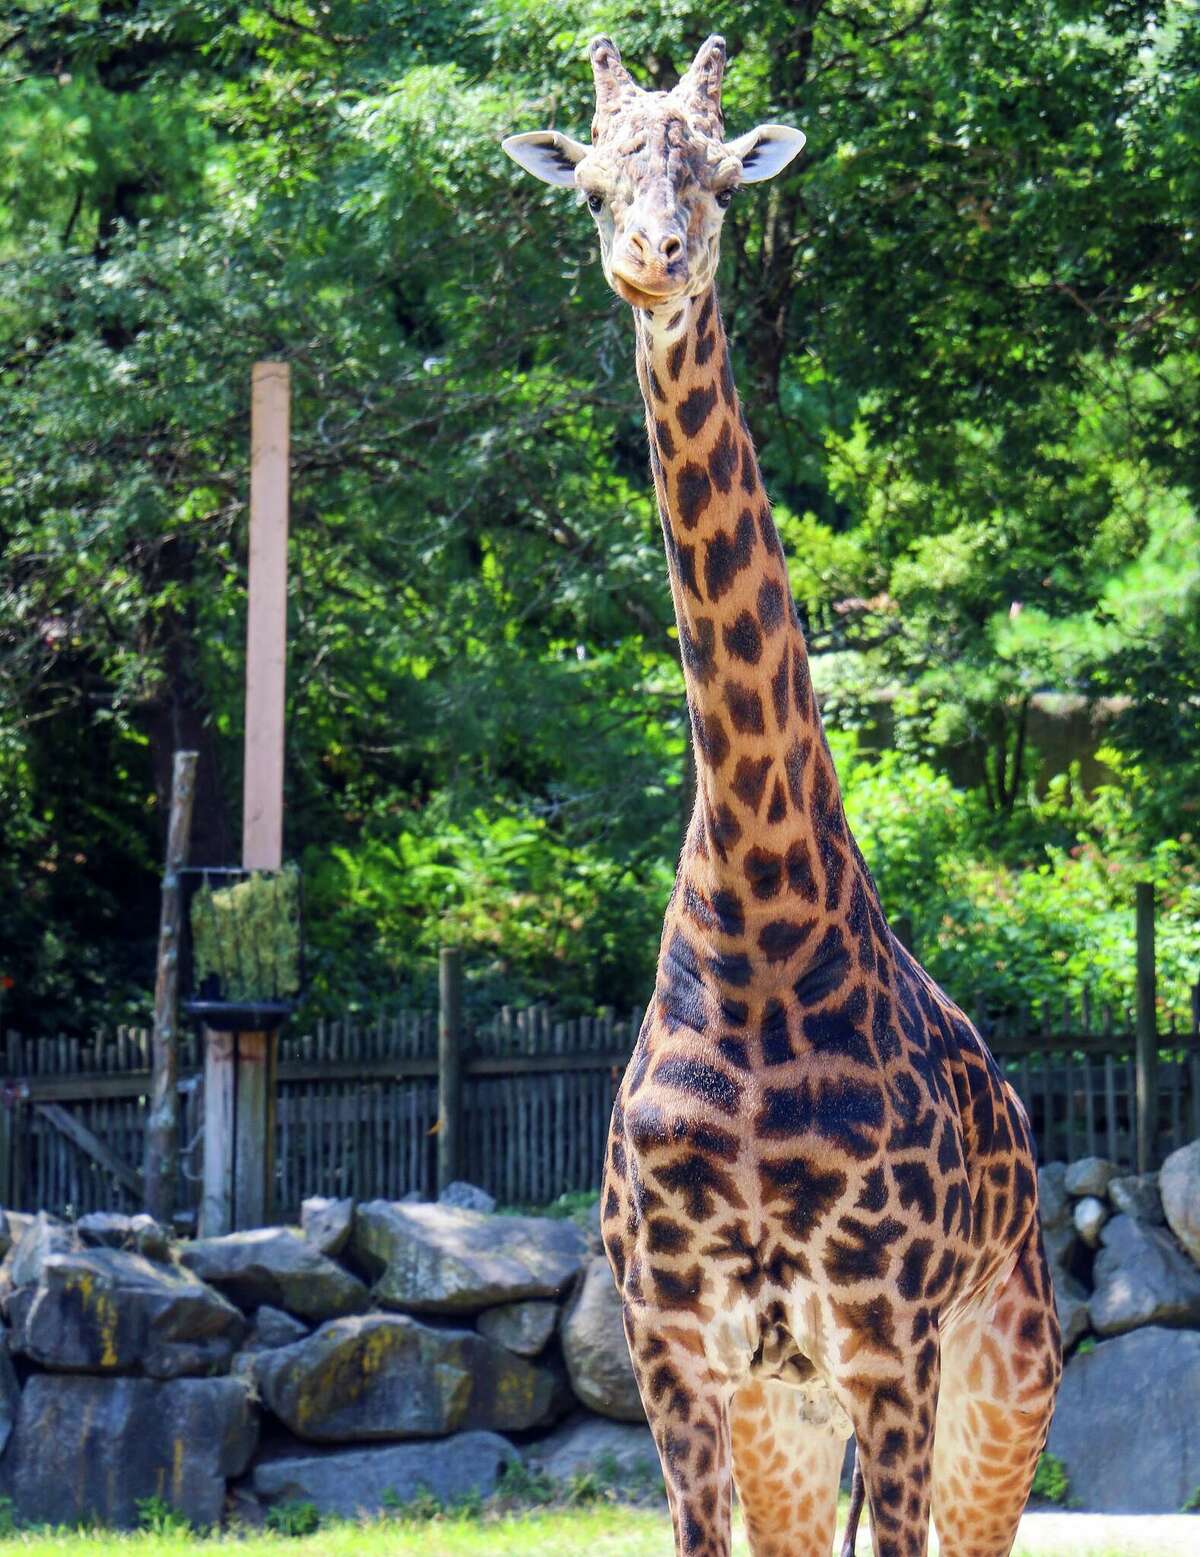 Roger Williams Park Zoo, Providence, R.I.